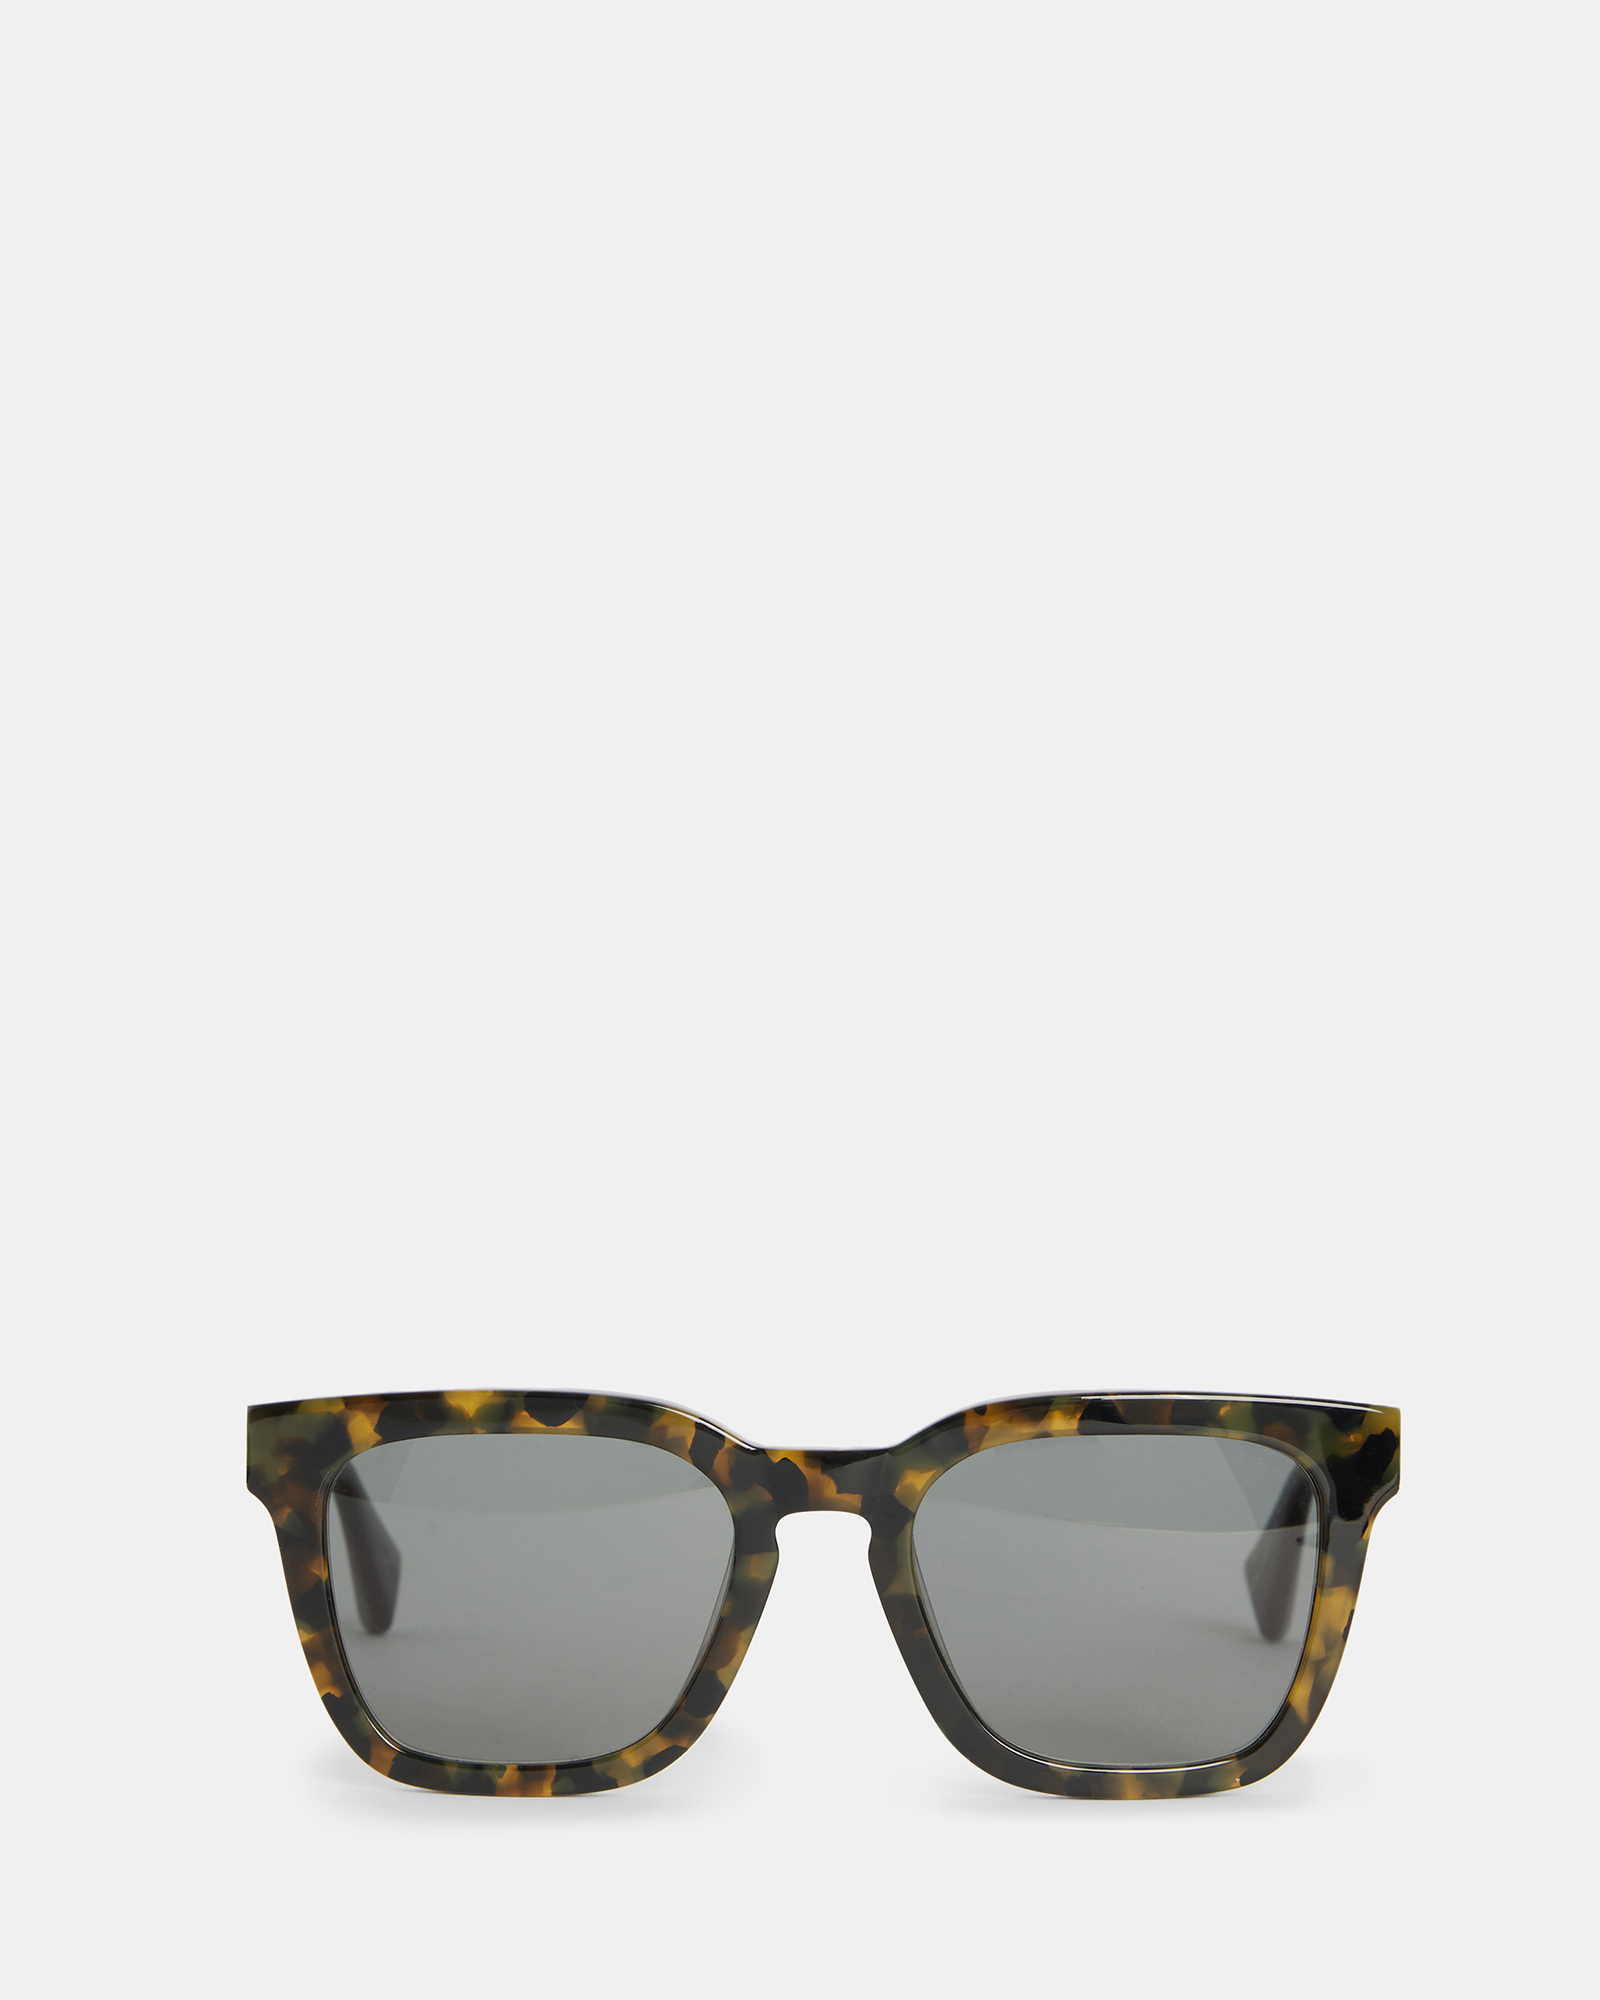 AllSaints Phoenix Square Sunglasses,, CAMO TORT